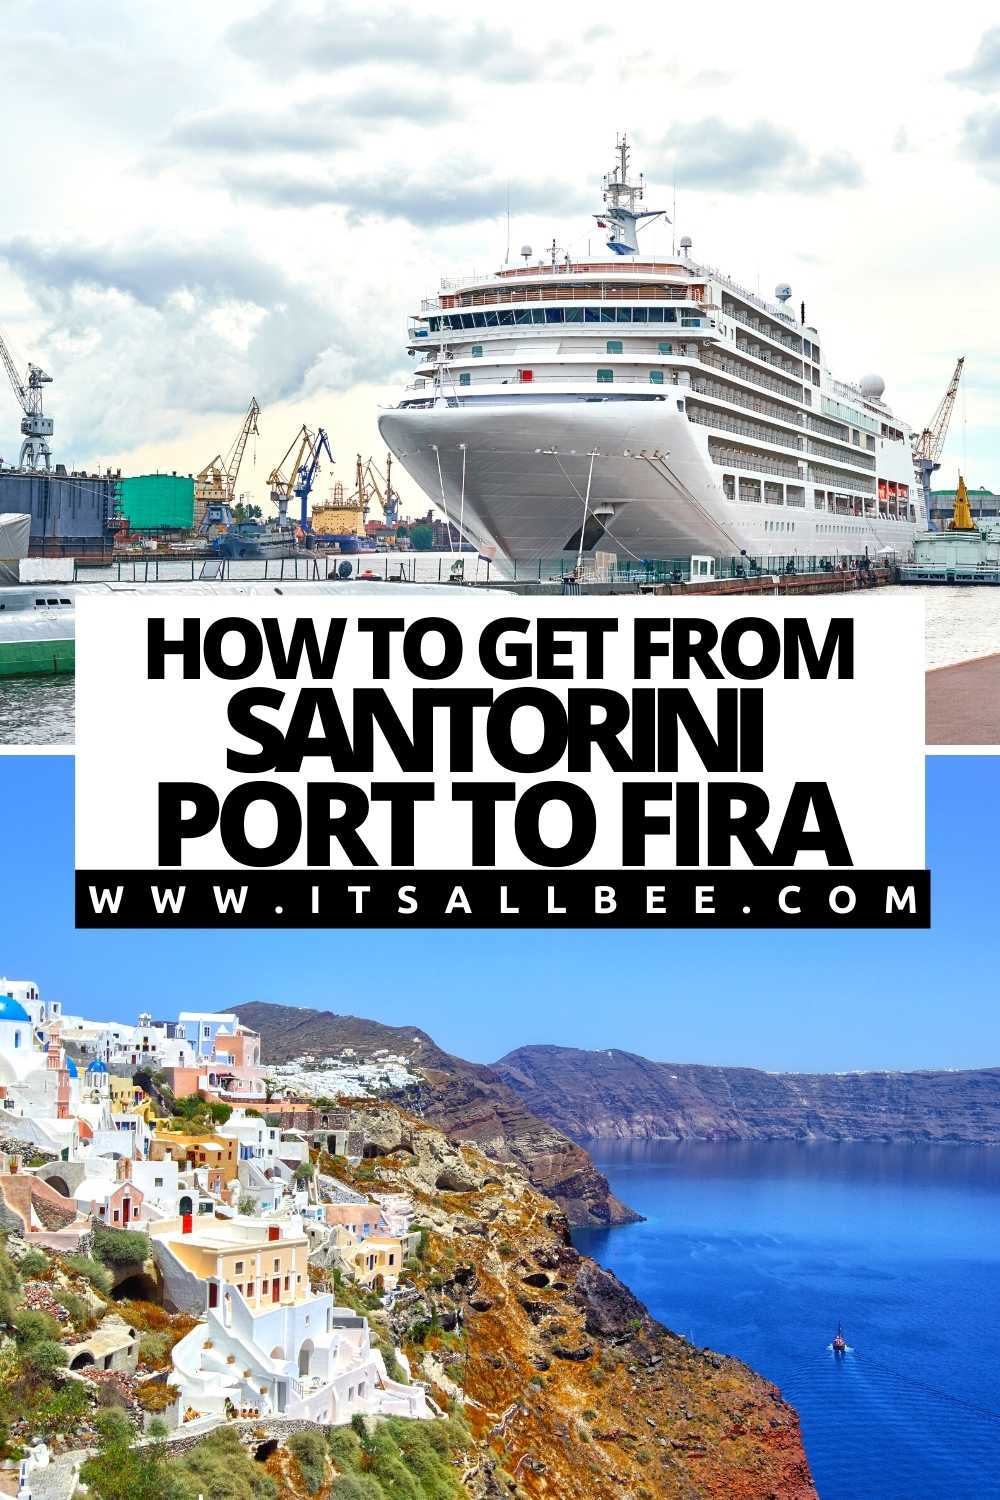 | Bus From Santorini Port To Fira | Fira To Port Bus Timetable | Taxi From Santorini Port To Fira | Bus Santorini Port To Fira | Santorini Port To Fira Transfer | Things To Do In Santorini | Santorini Travel Guide | Santorini Itinerary 